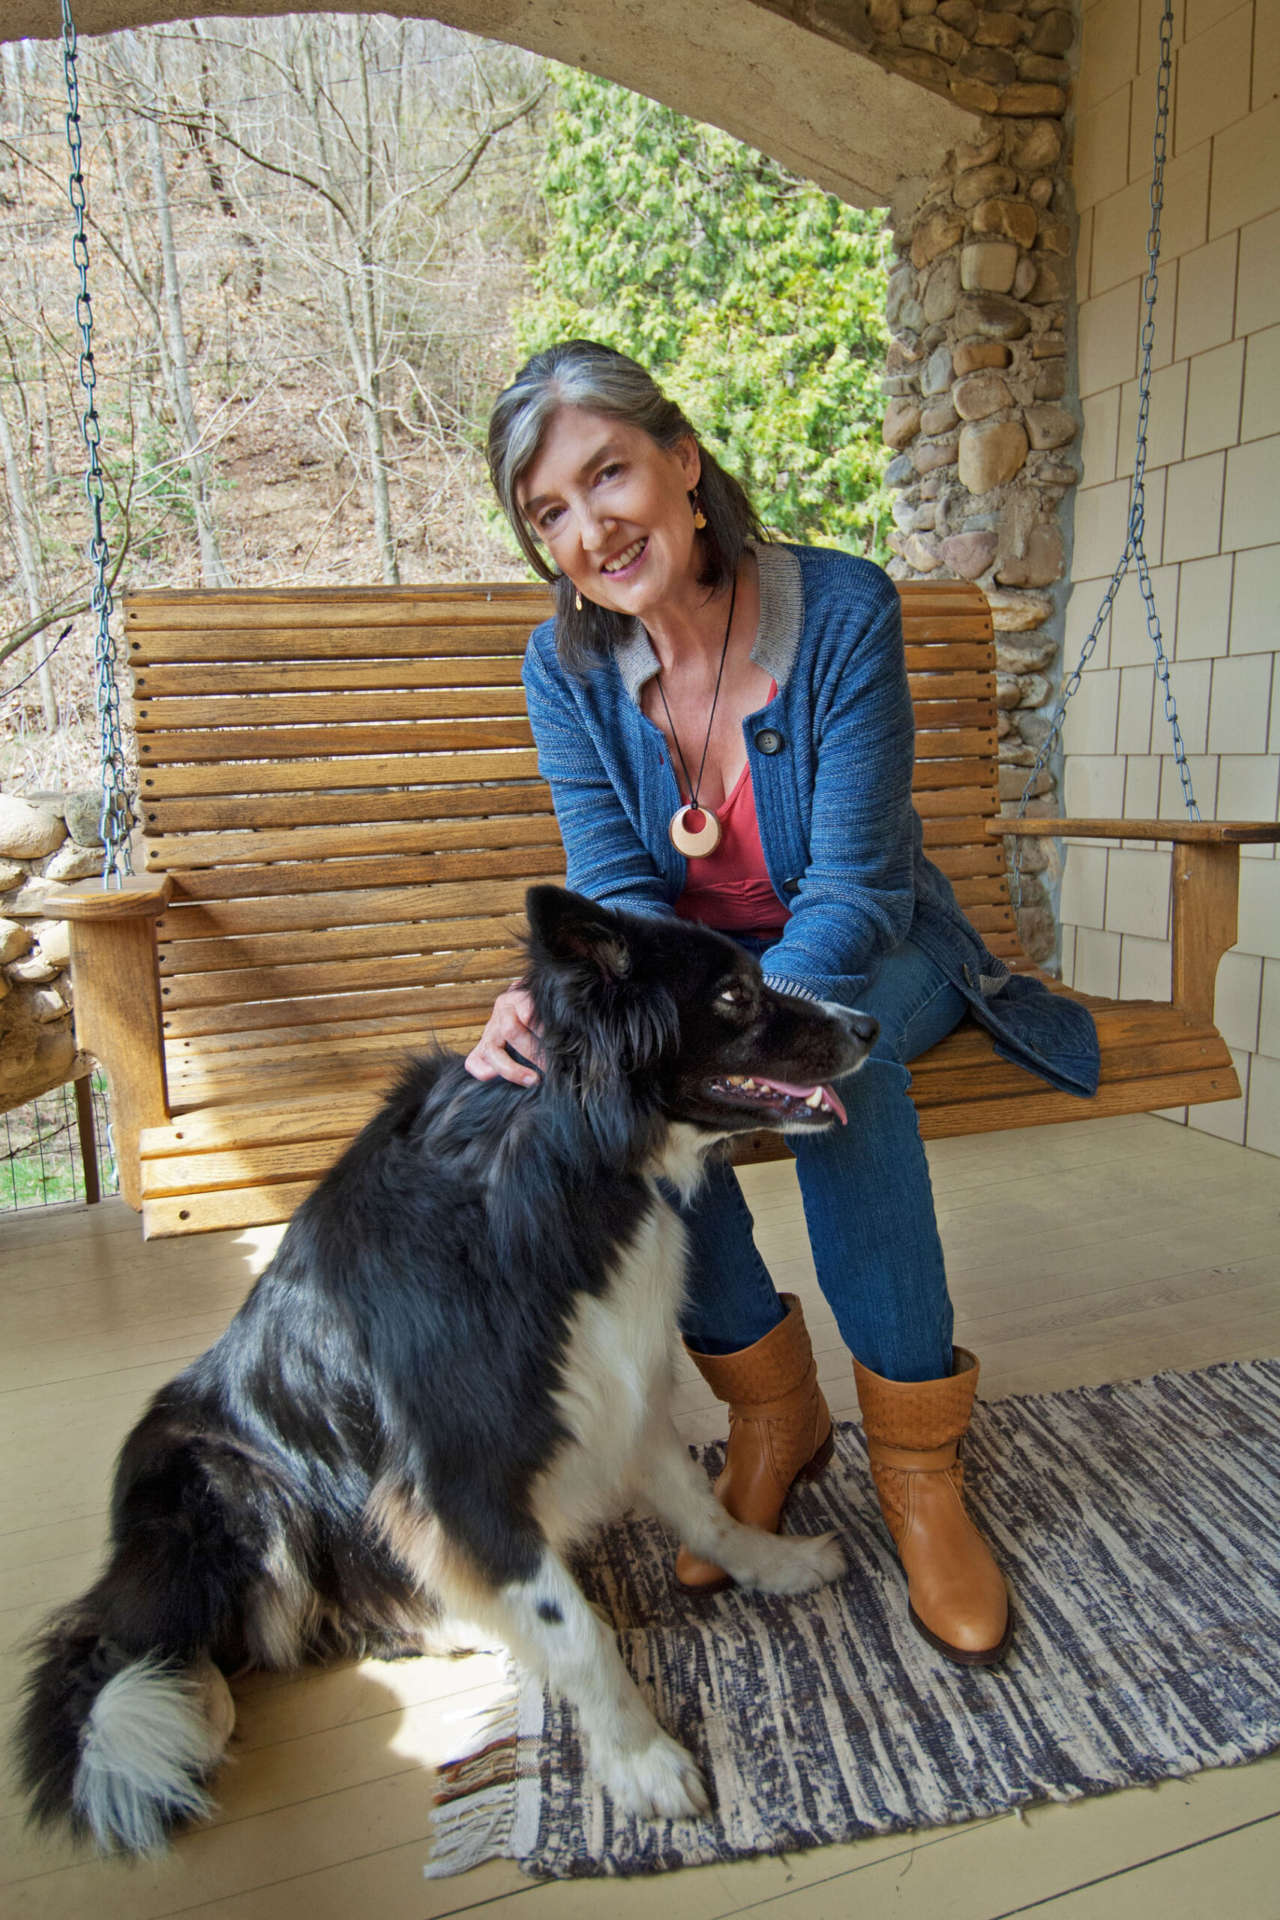 Barbara Kingsolver sitting on porch swing petting collie dog.